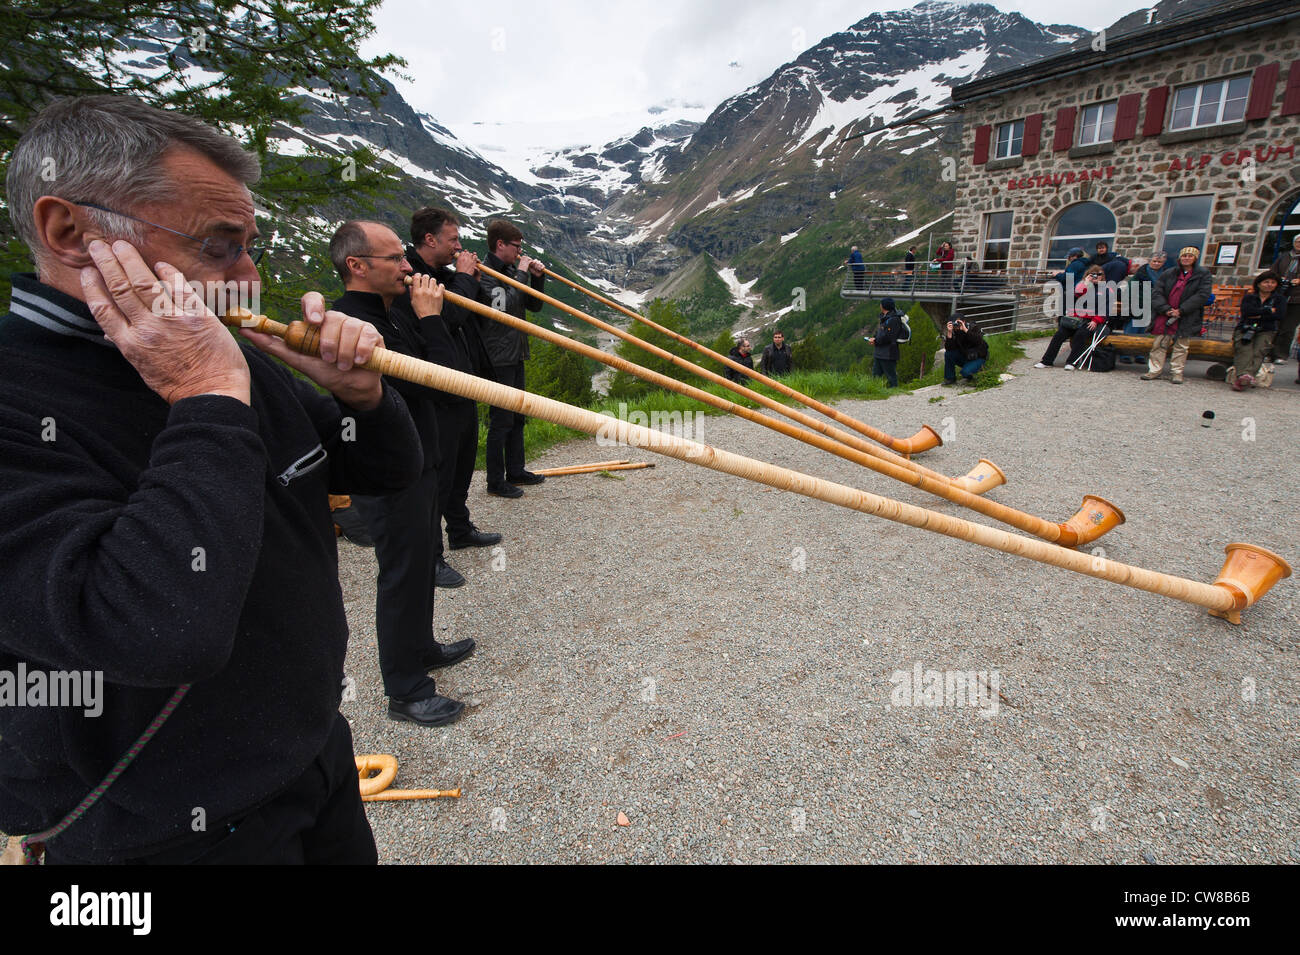 Men playing alpenhorn or alpine horn, Switzerland. Stock Photo